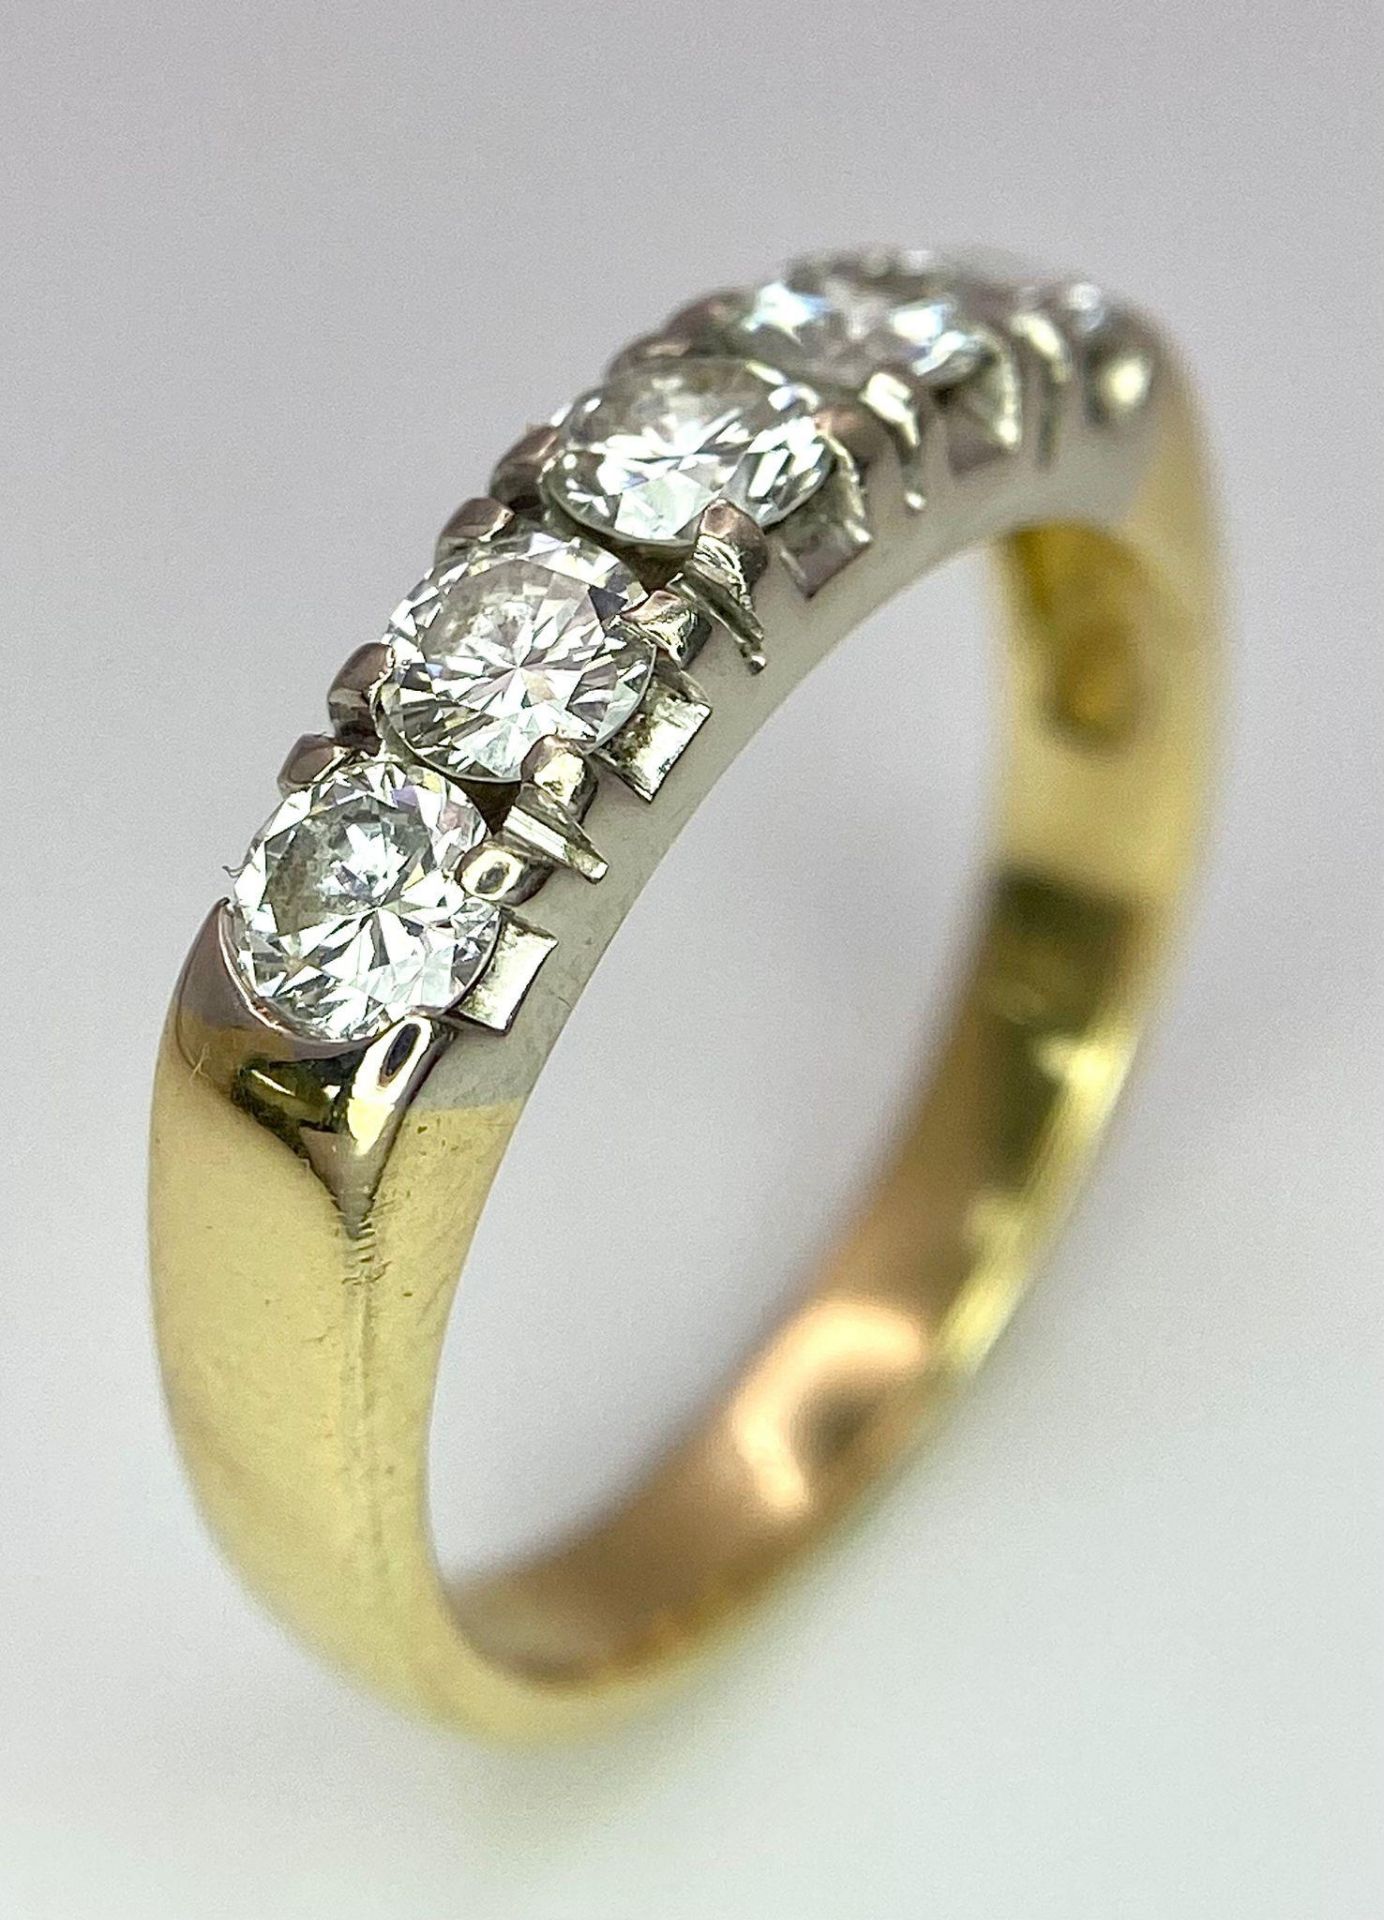 An 18K Yellow Gold Five Stone Diamond Ring. 0.85ctw of brilliant round cut diamonds. Size L. 3.6g - Image 4 of 8